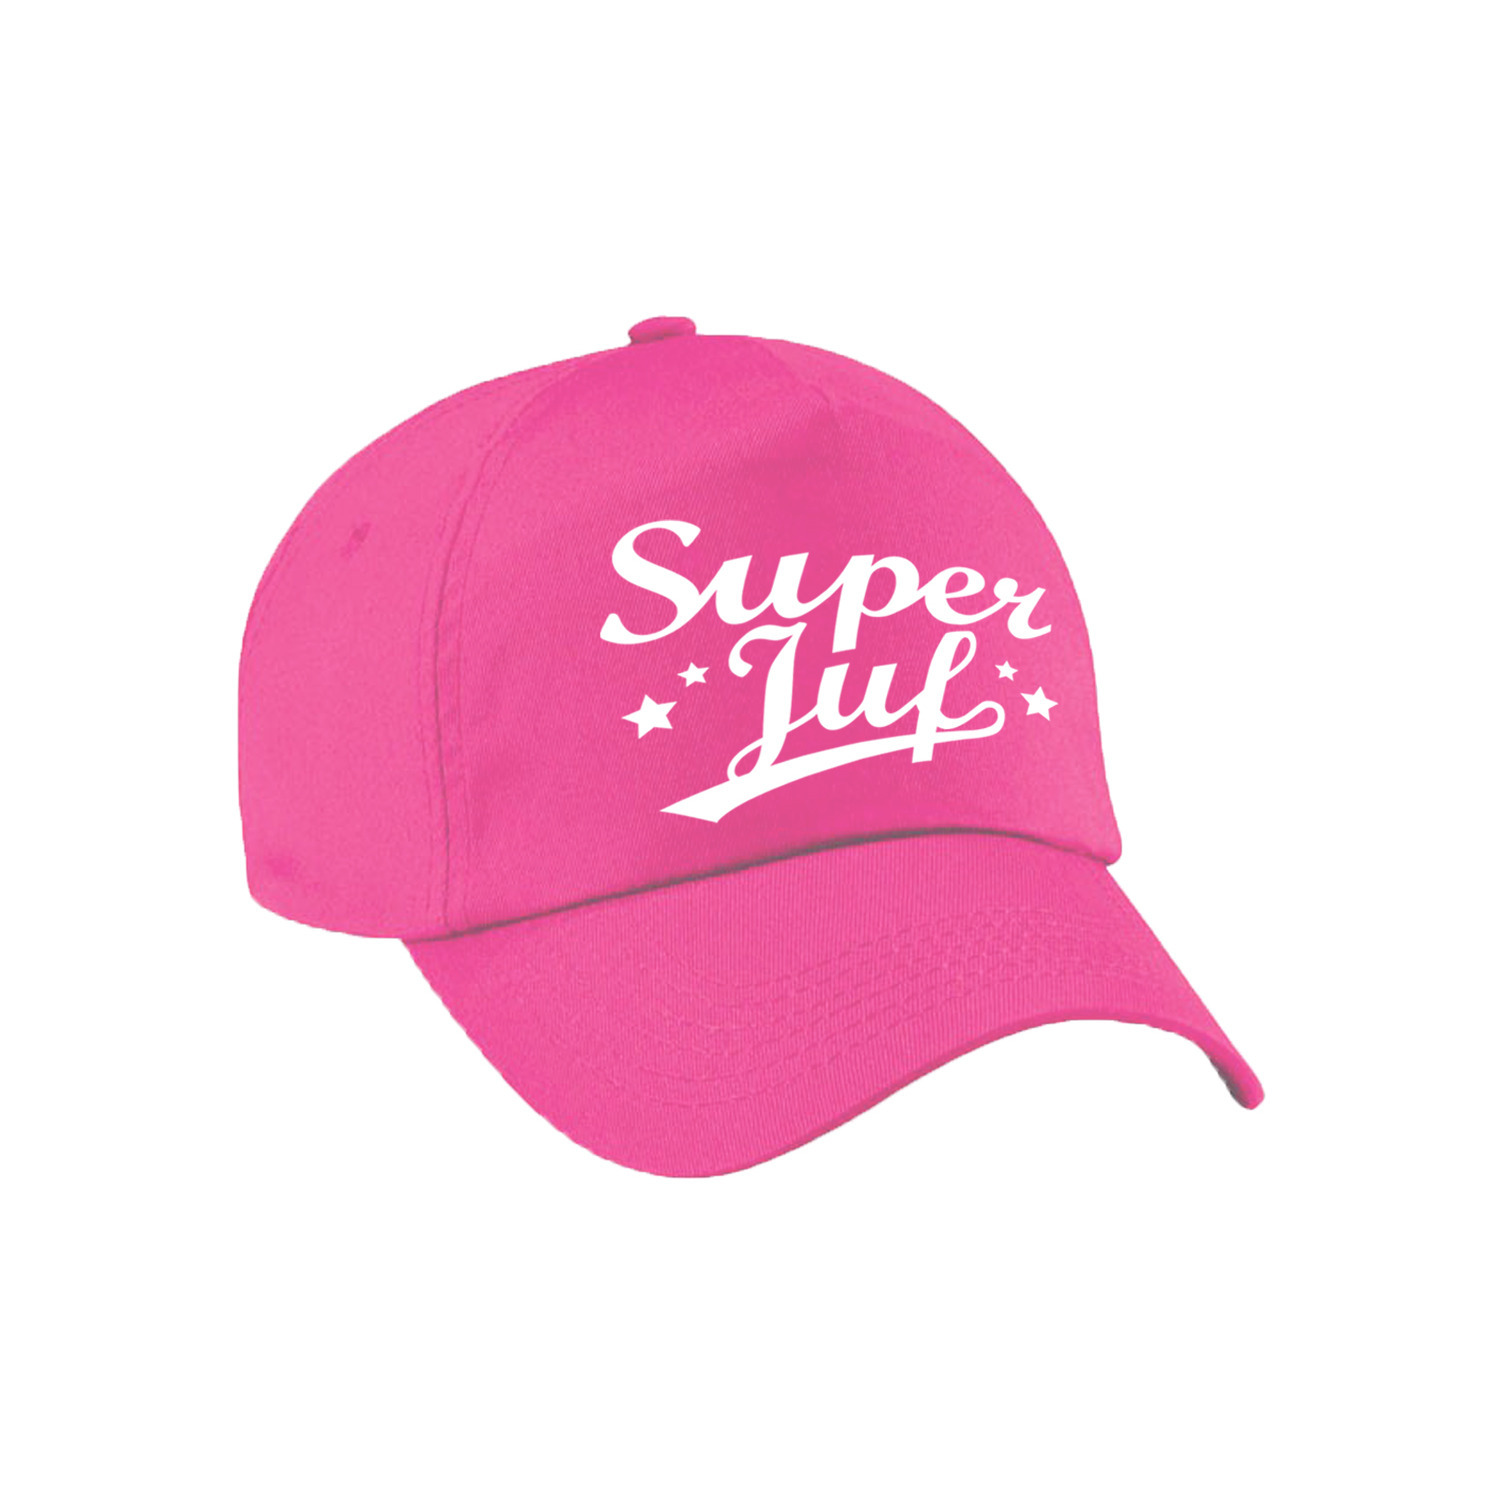 Super juf cadeau pet /cap roze voor dames